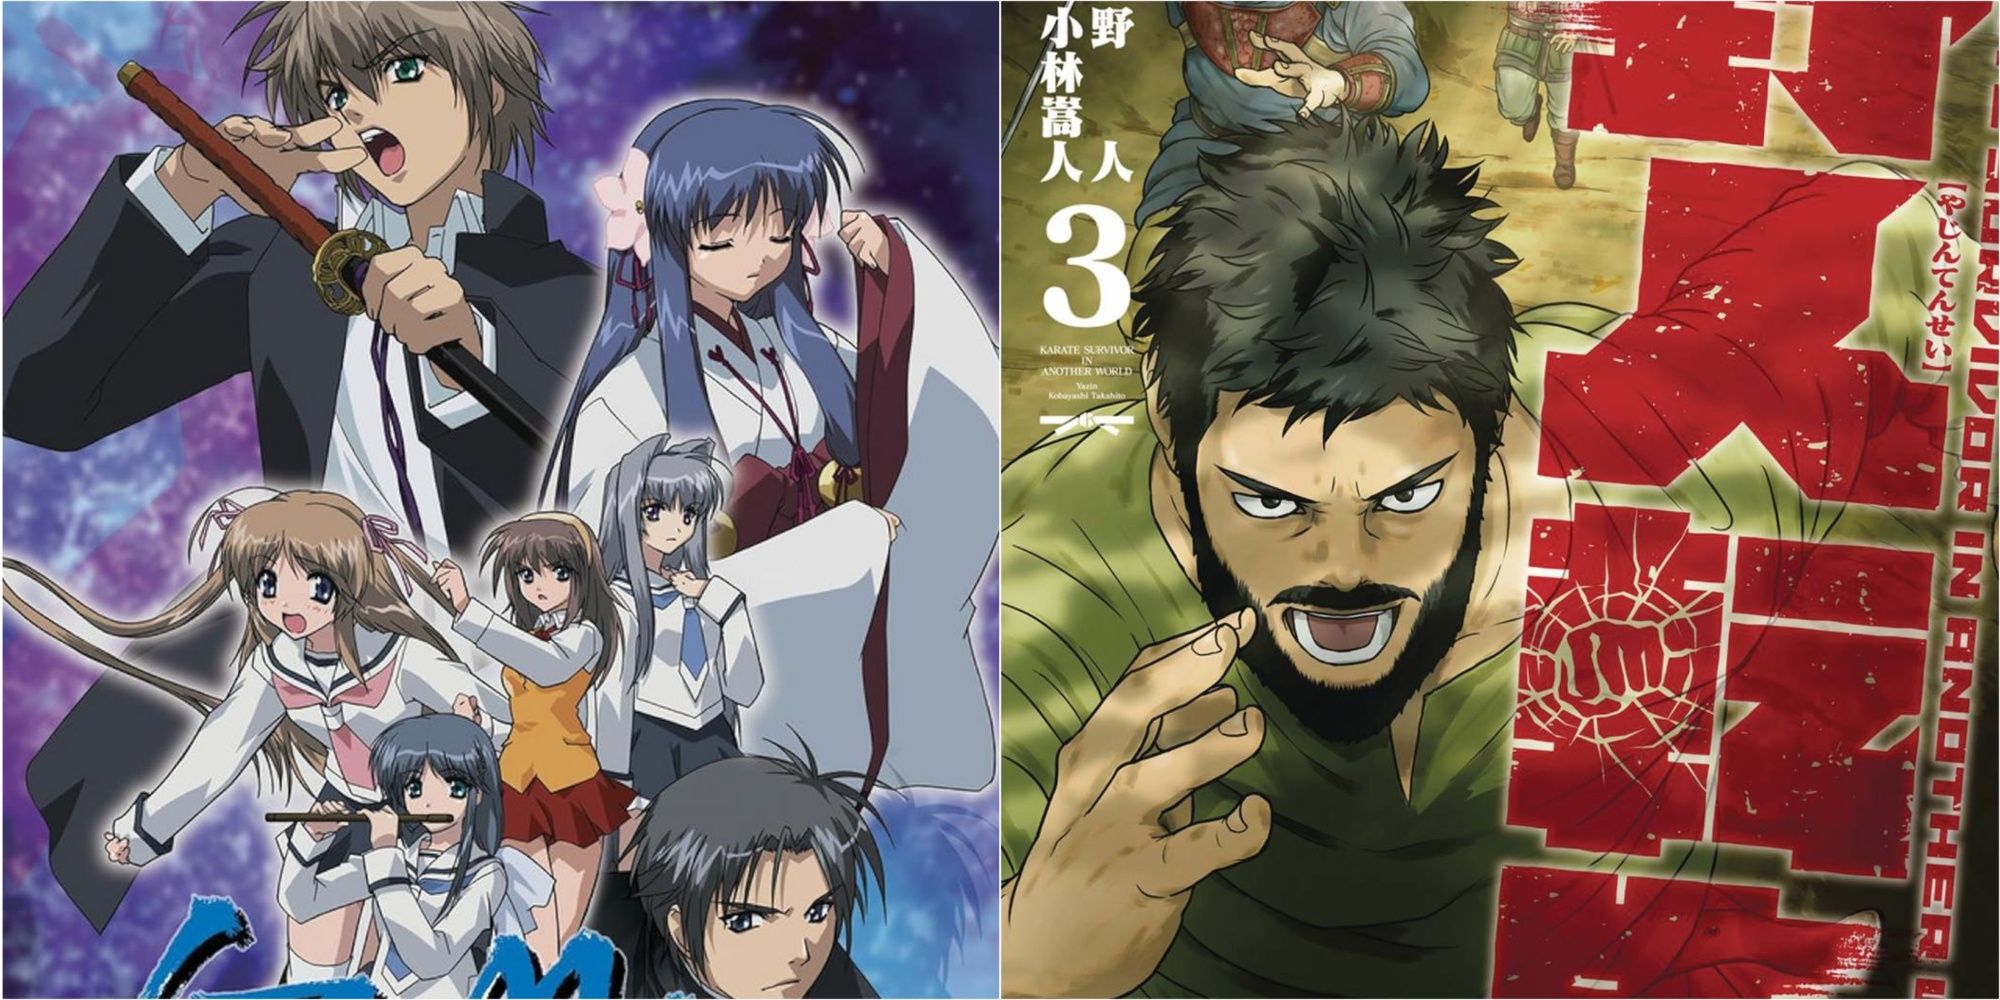 Isekai Anime and Manga With a Martial Art Master Protagonist